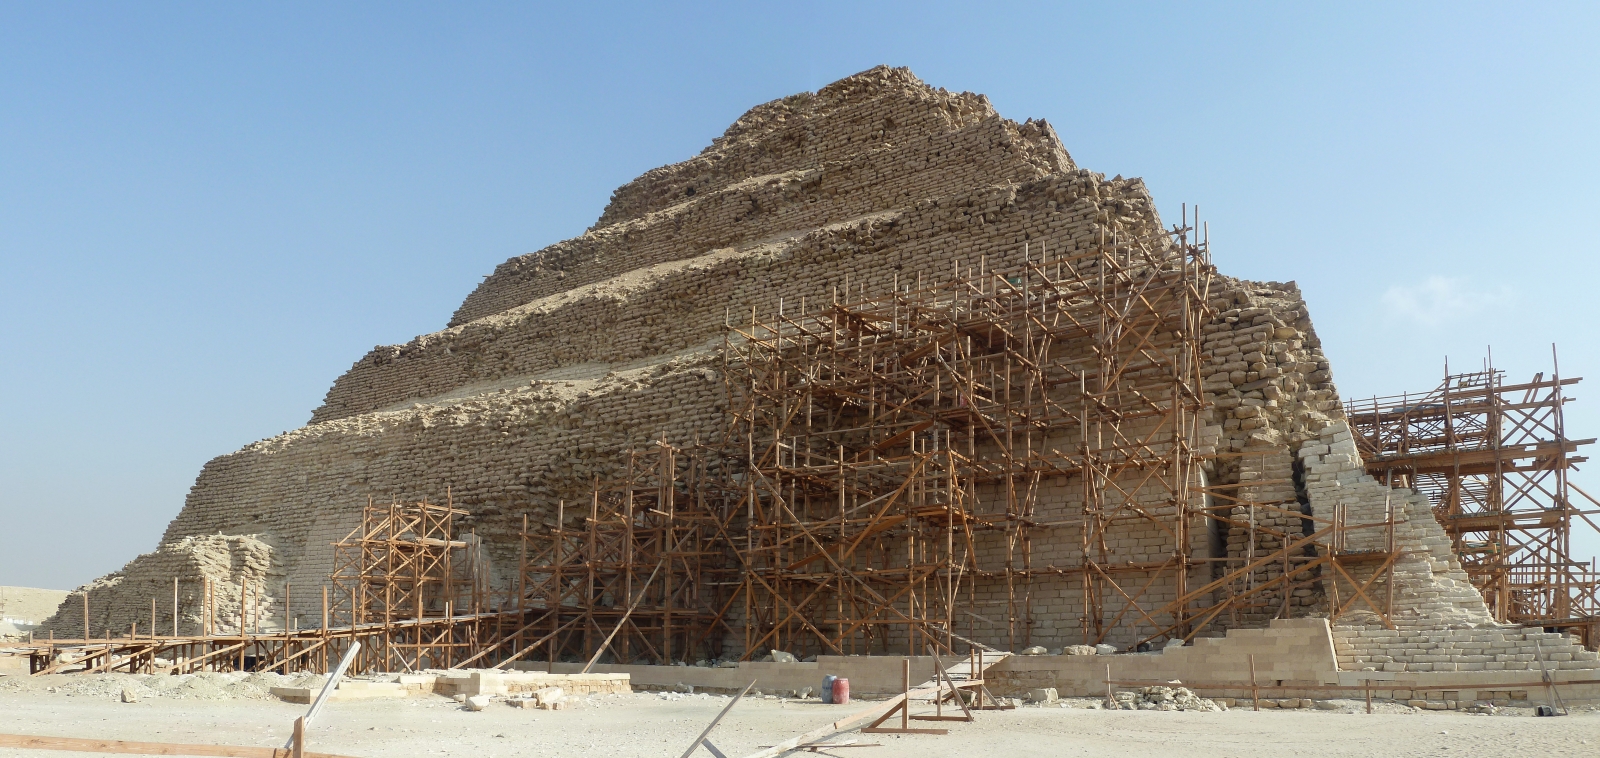 The Pyramid of Djoser